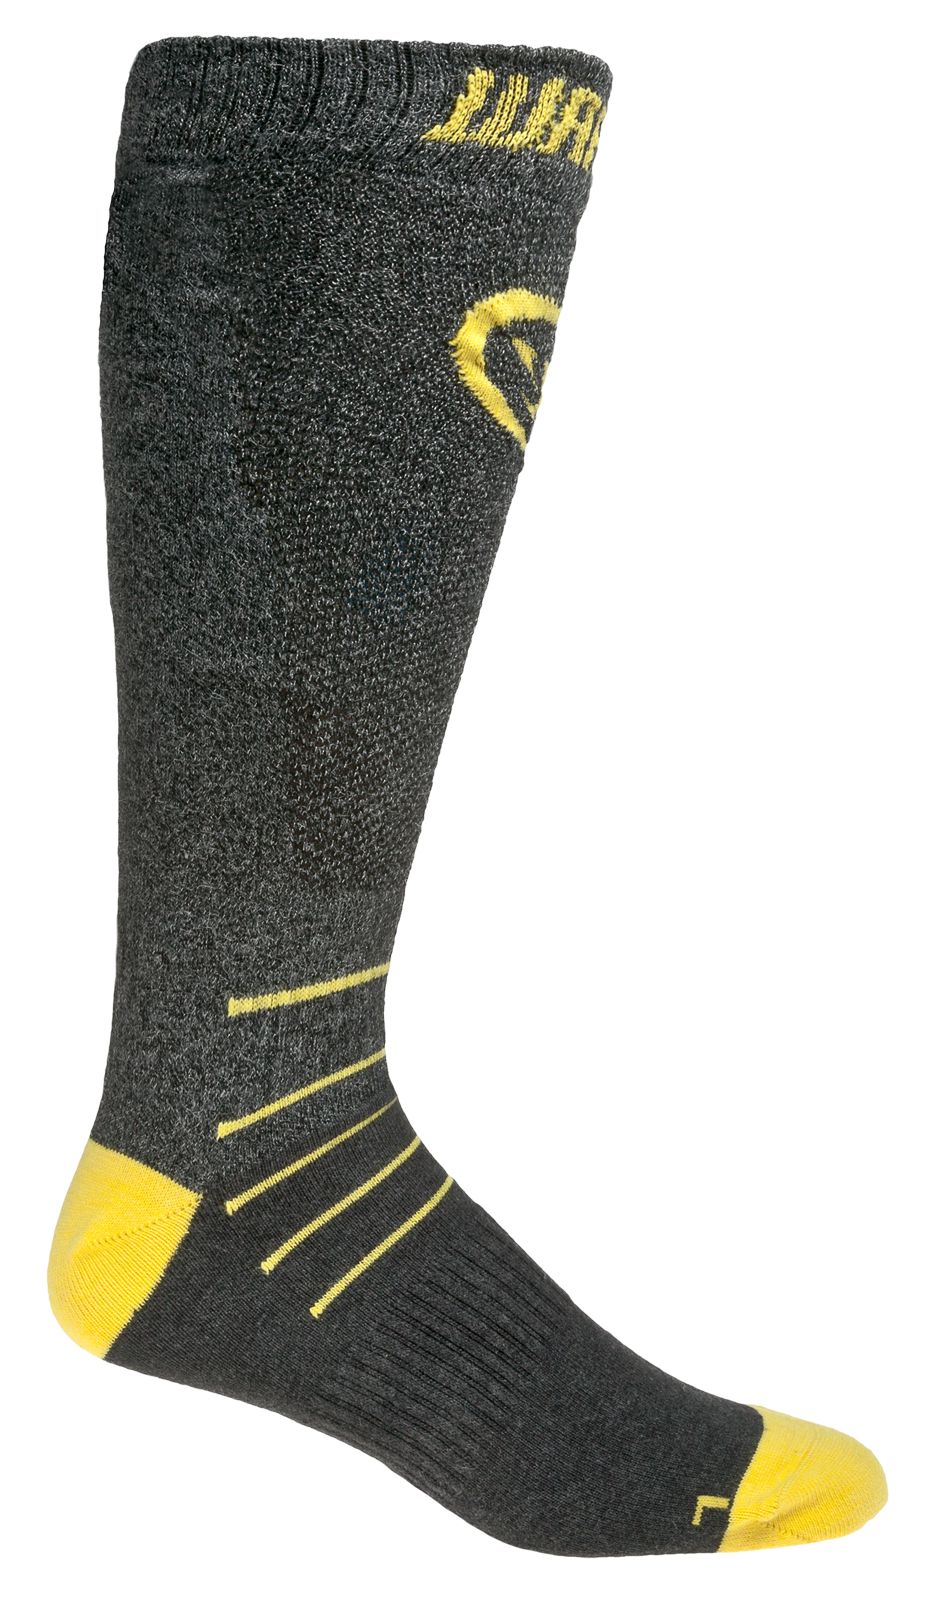 Dynasty AX1 Hockey Socks, Black image number 1